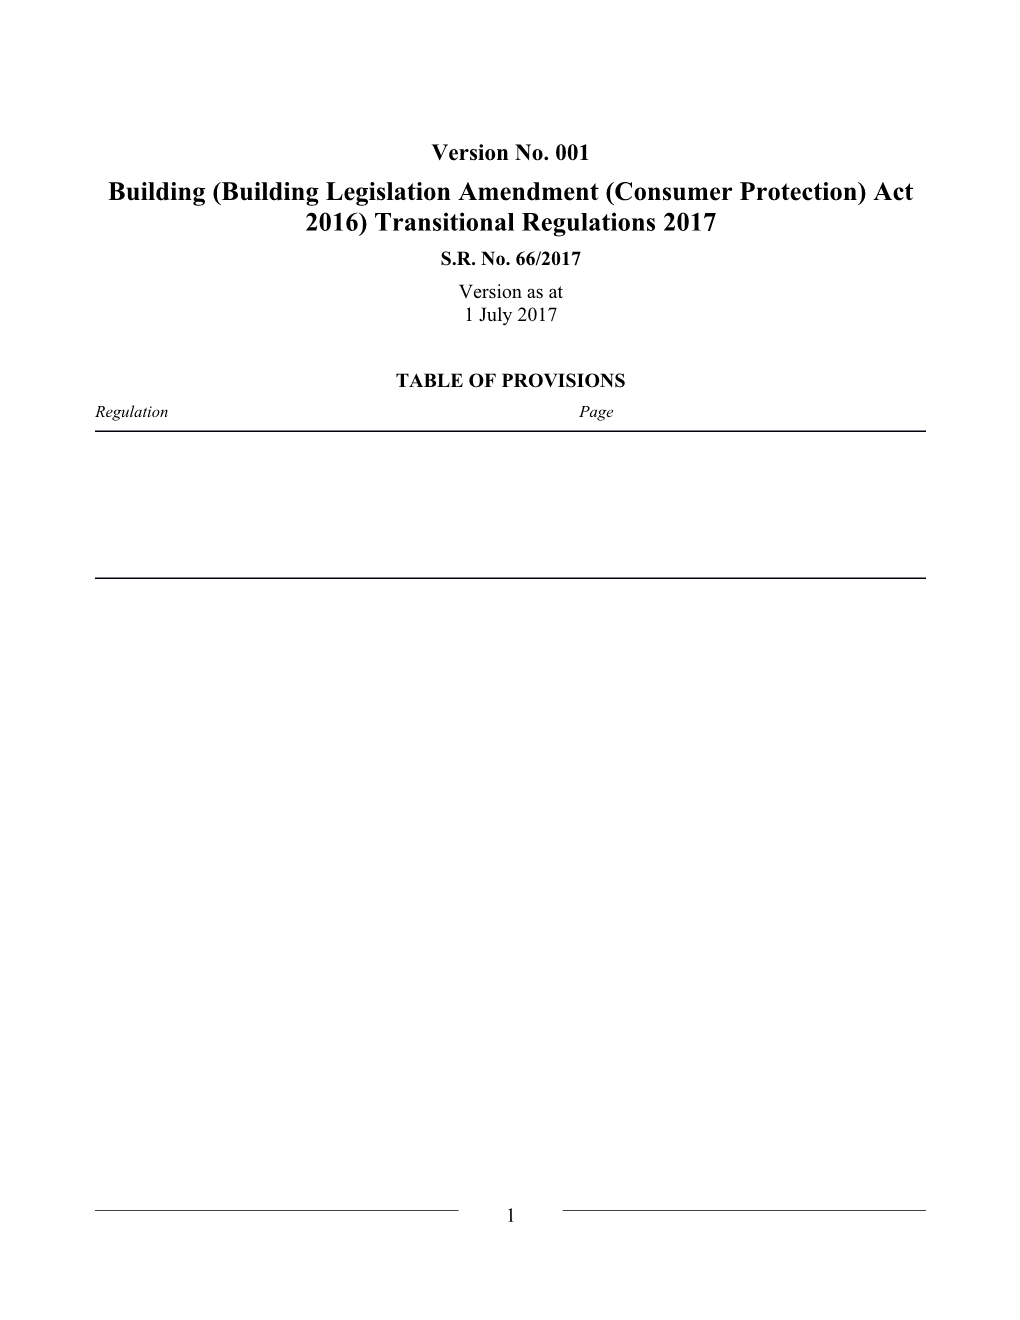 Building (Building Legislation Amendment (Consumer Protection) Act 2016) Transitional